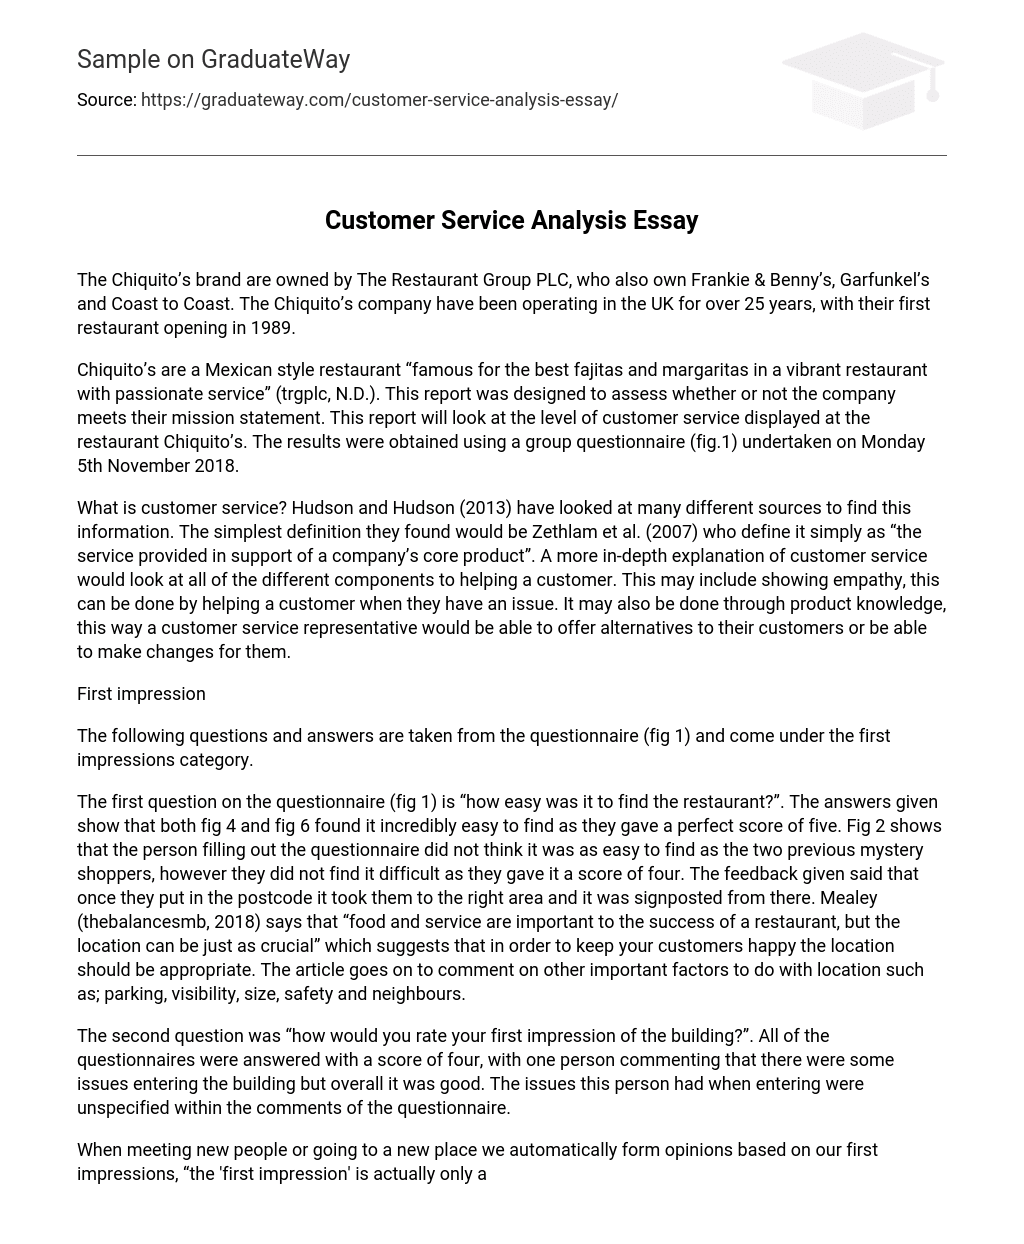 Customer Service Analysis Essay